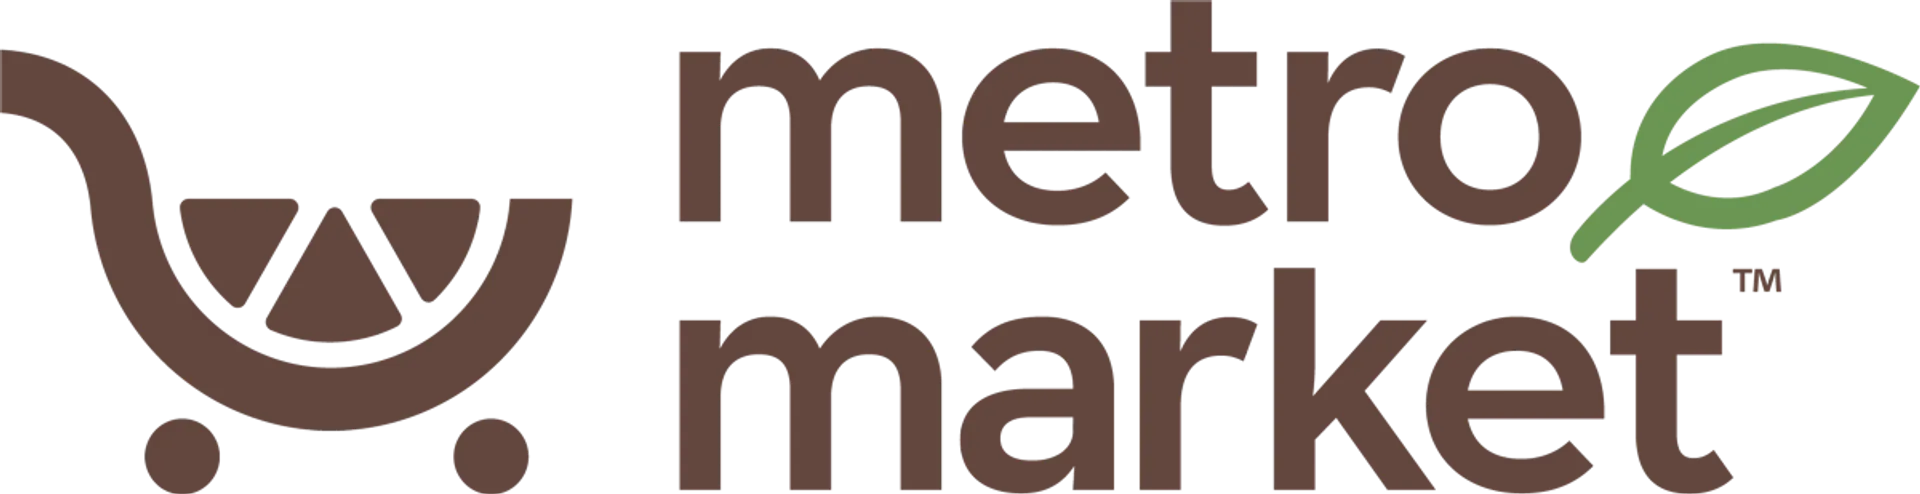 METRO MARKET logo current weekly ad